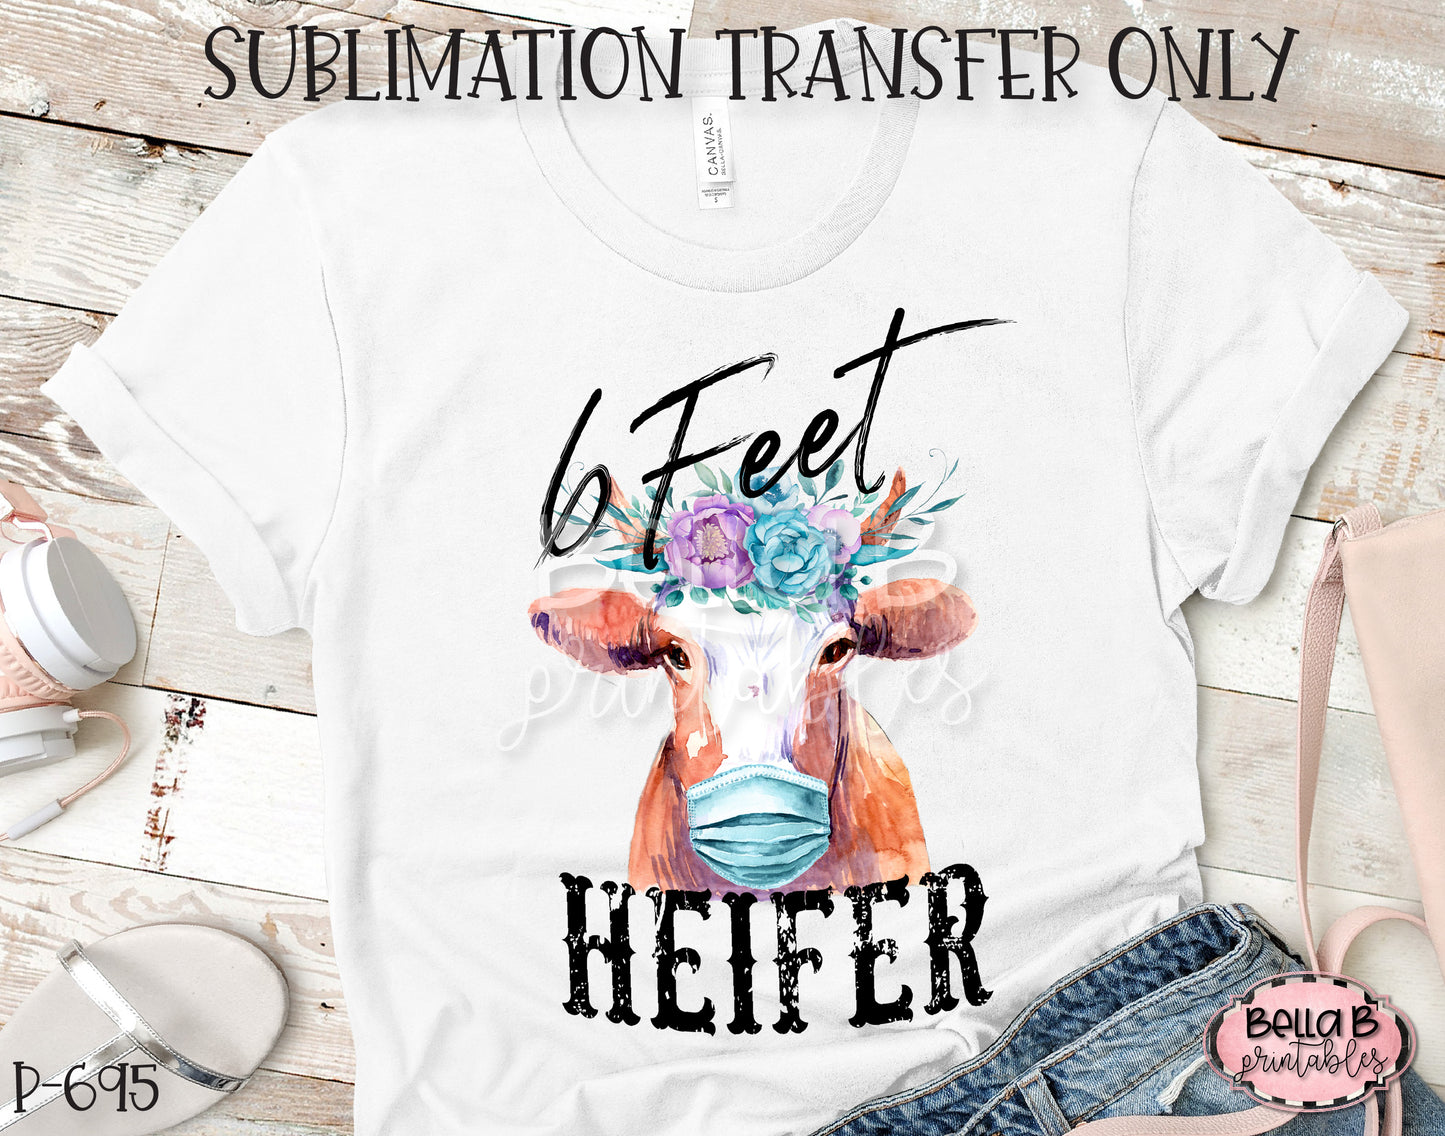 6 Feet Heifer Sublimation Transfer, Ready To Press, Heat Press Transfer, Sublimation Print